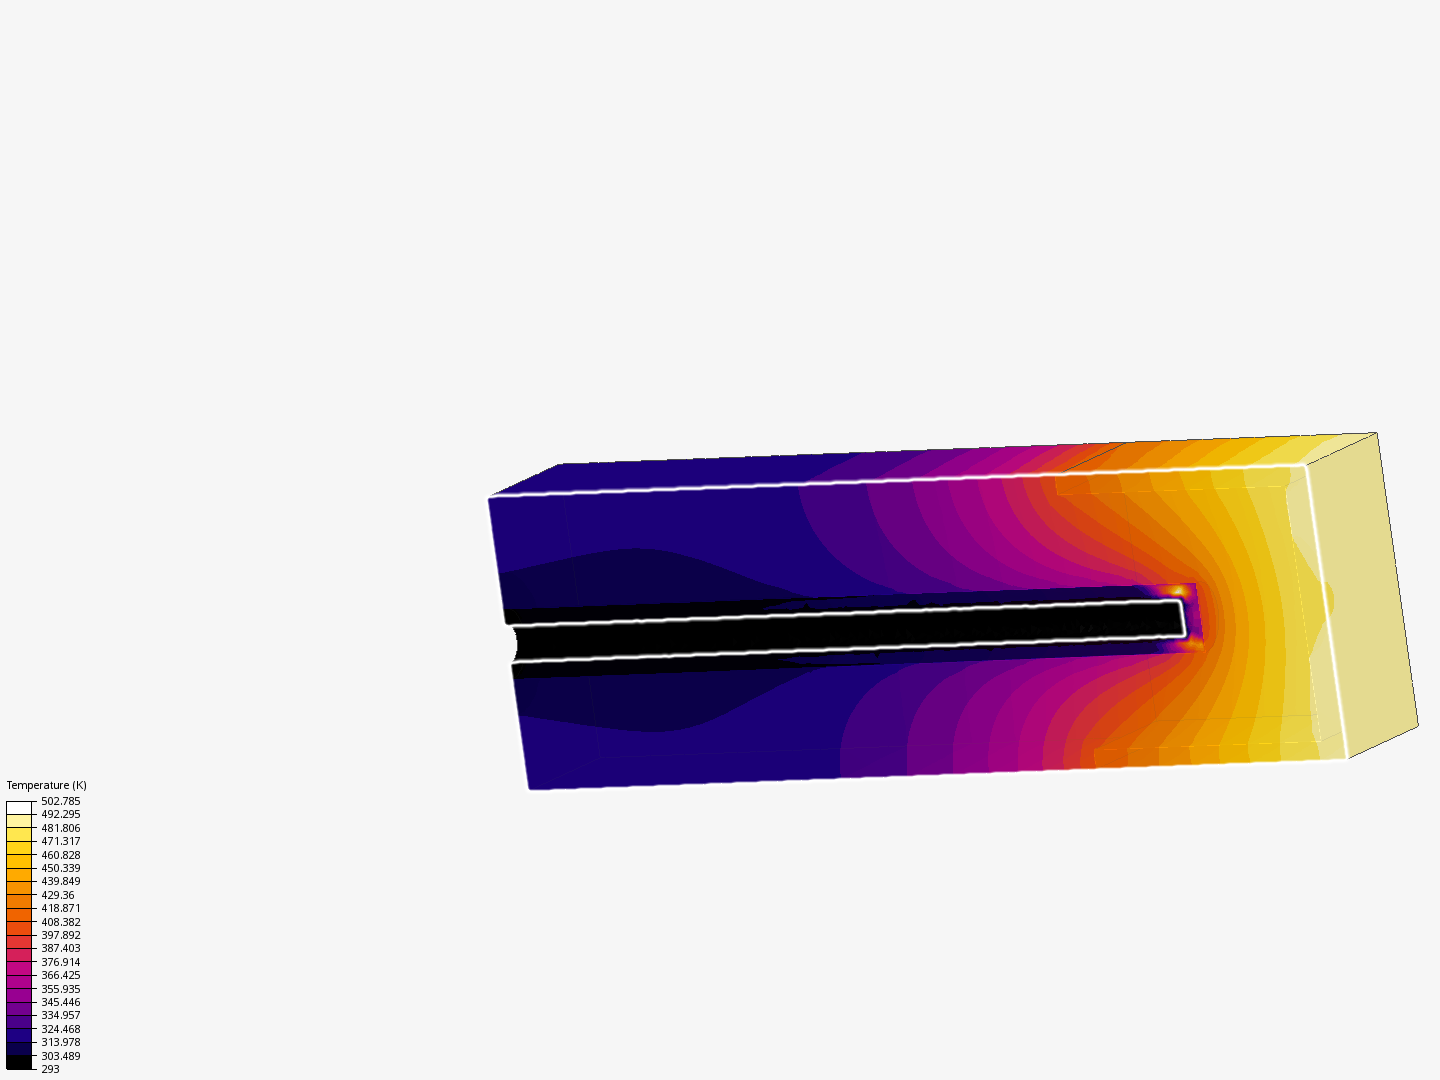 Baseline heat transfer image